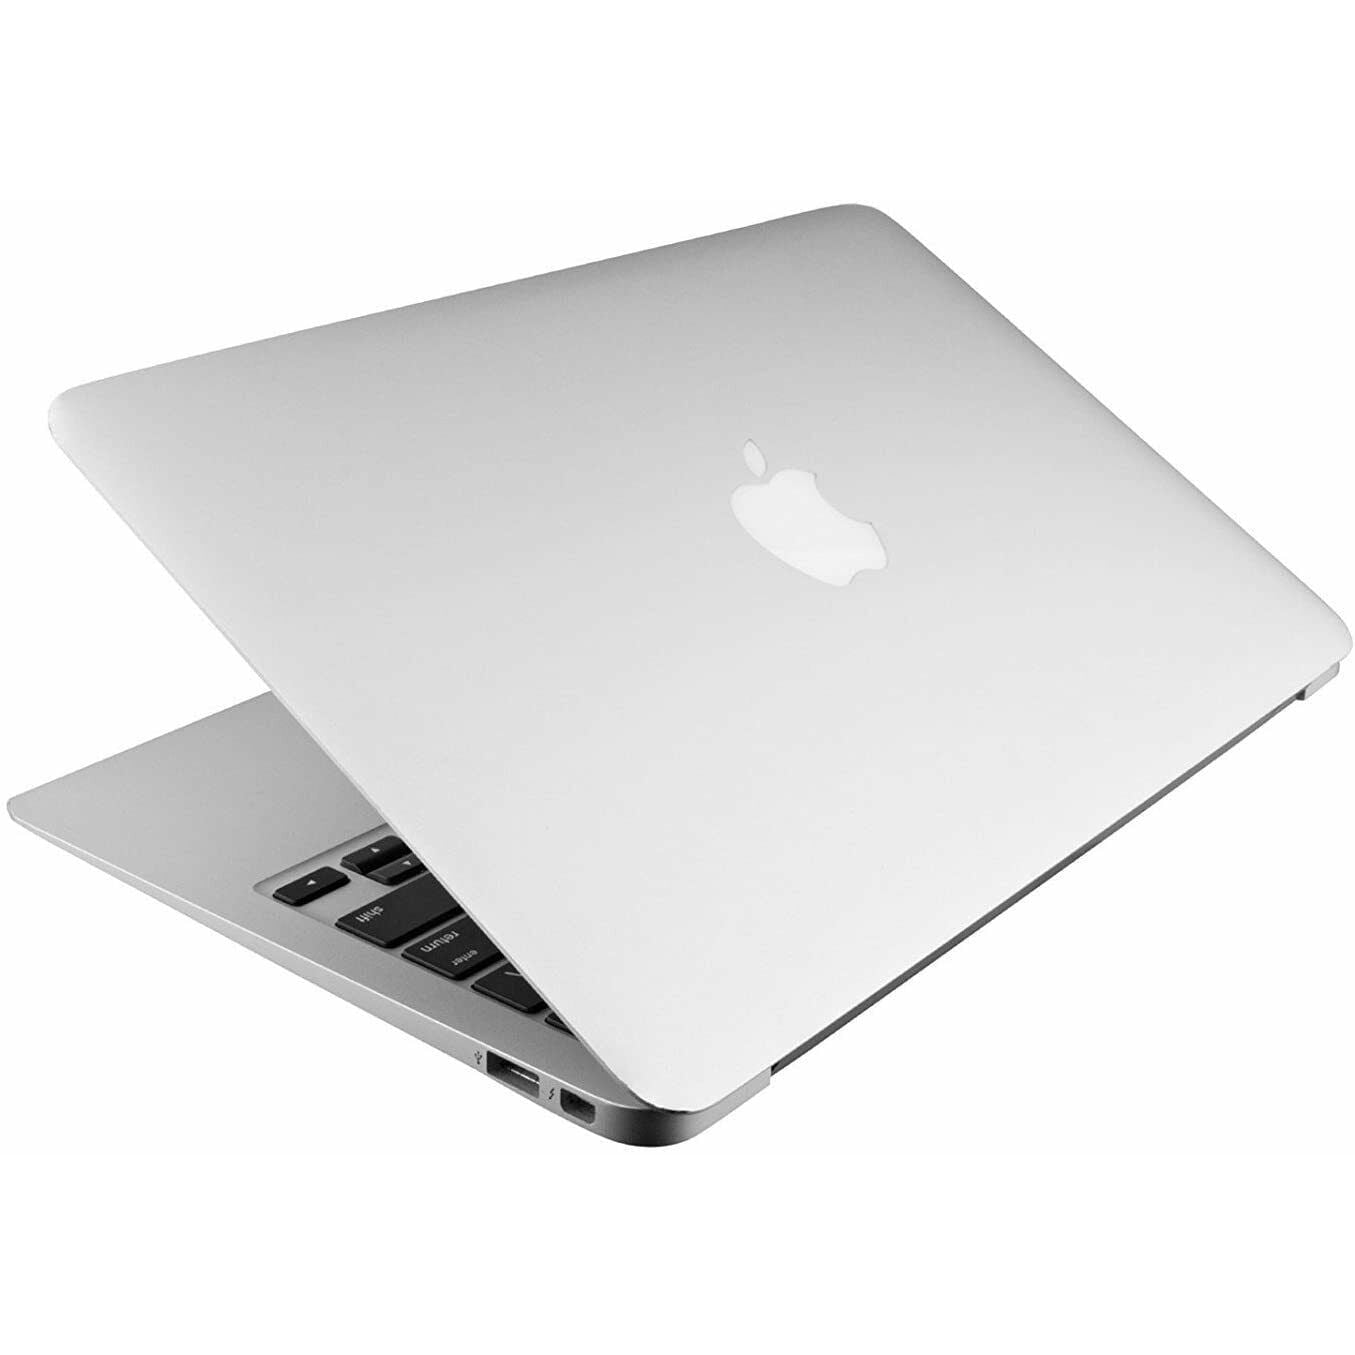 Apple MacBook Air 13.3'' MD760LL/A (2013) Laptop, Intel Core i5, 4GB RAM, 128GB, Silver